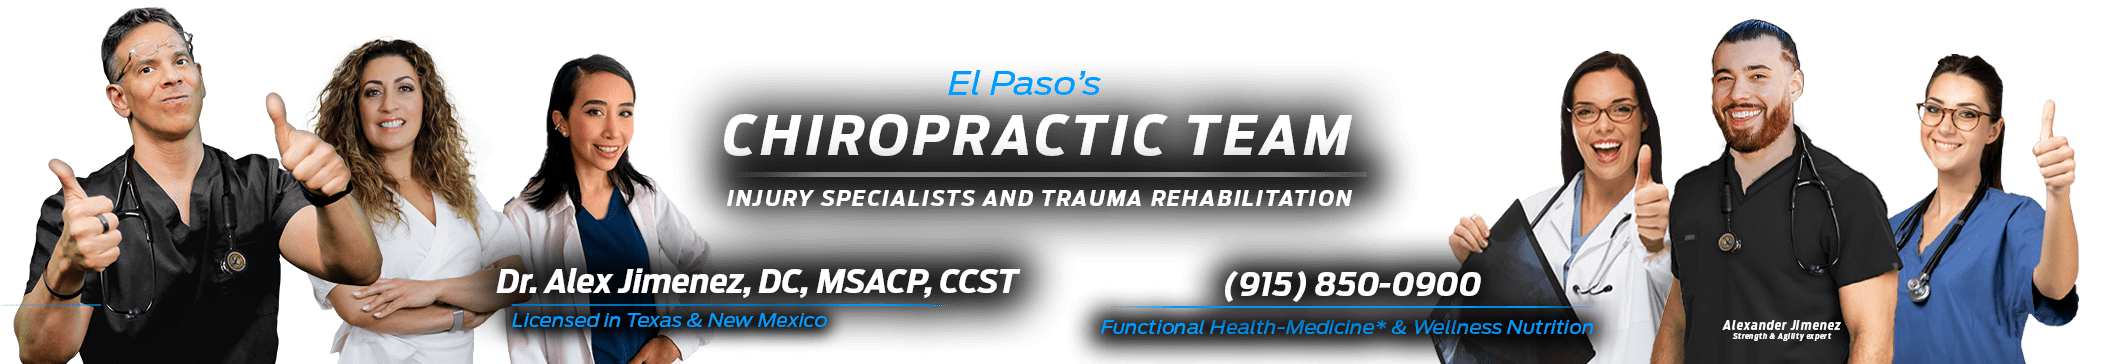 El Paso's Premier Chiropractic Clinic 915-850-0900